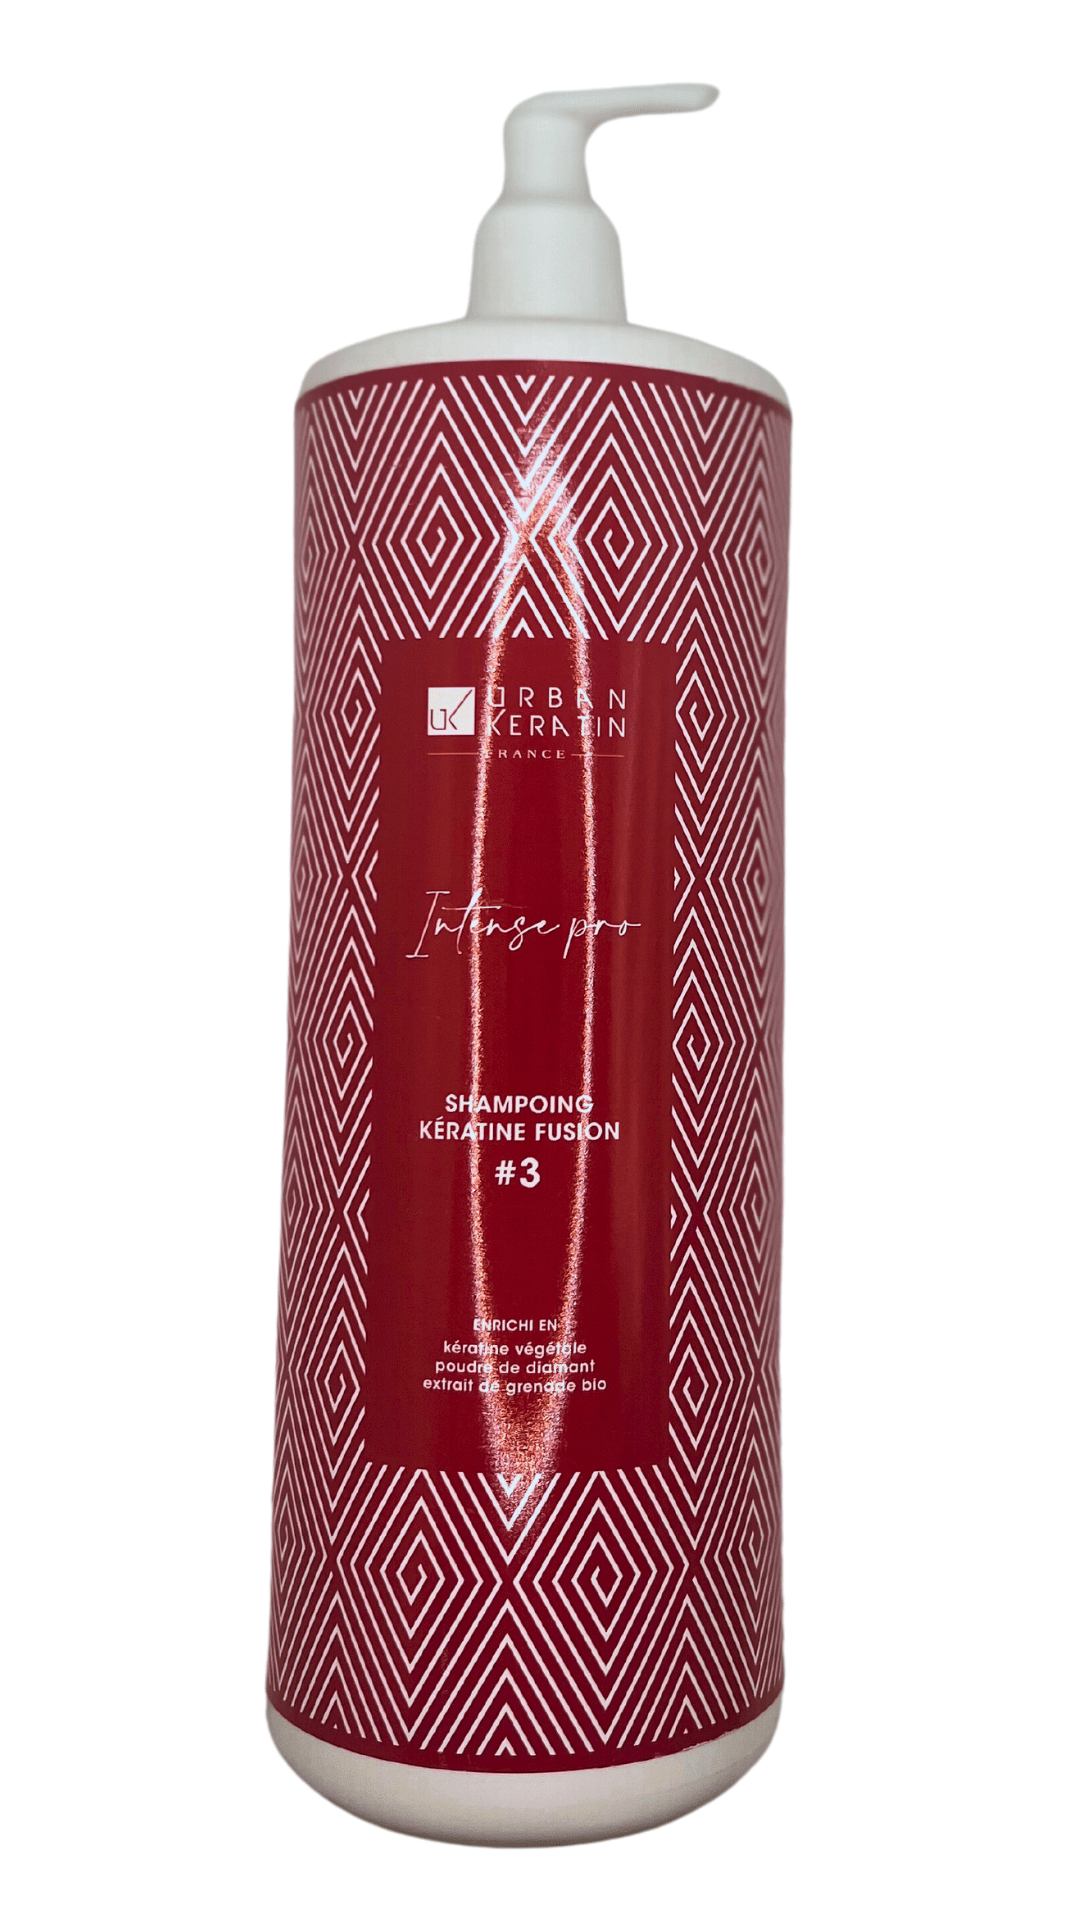 URBAN KERATINE - Keratin fusion shampoo #3 - 53 Karat